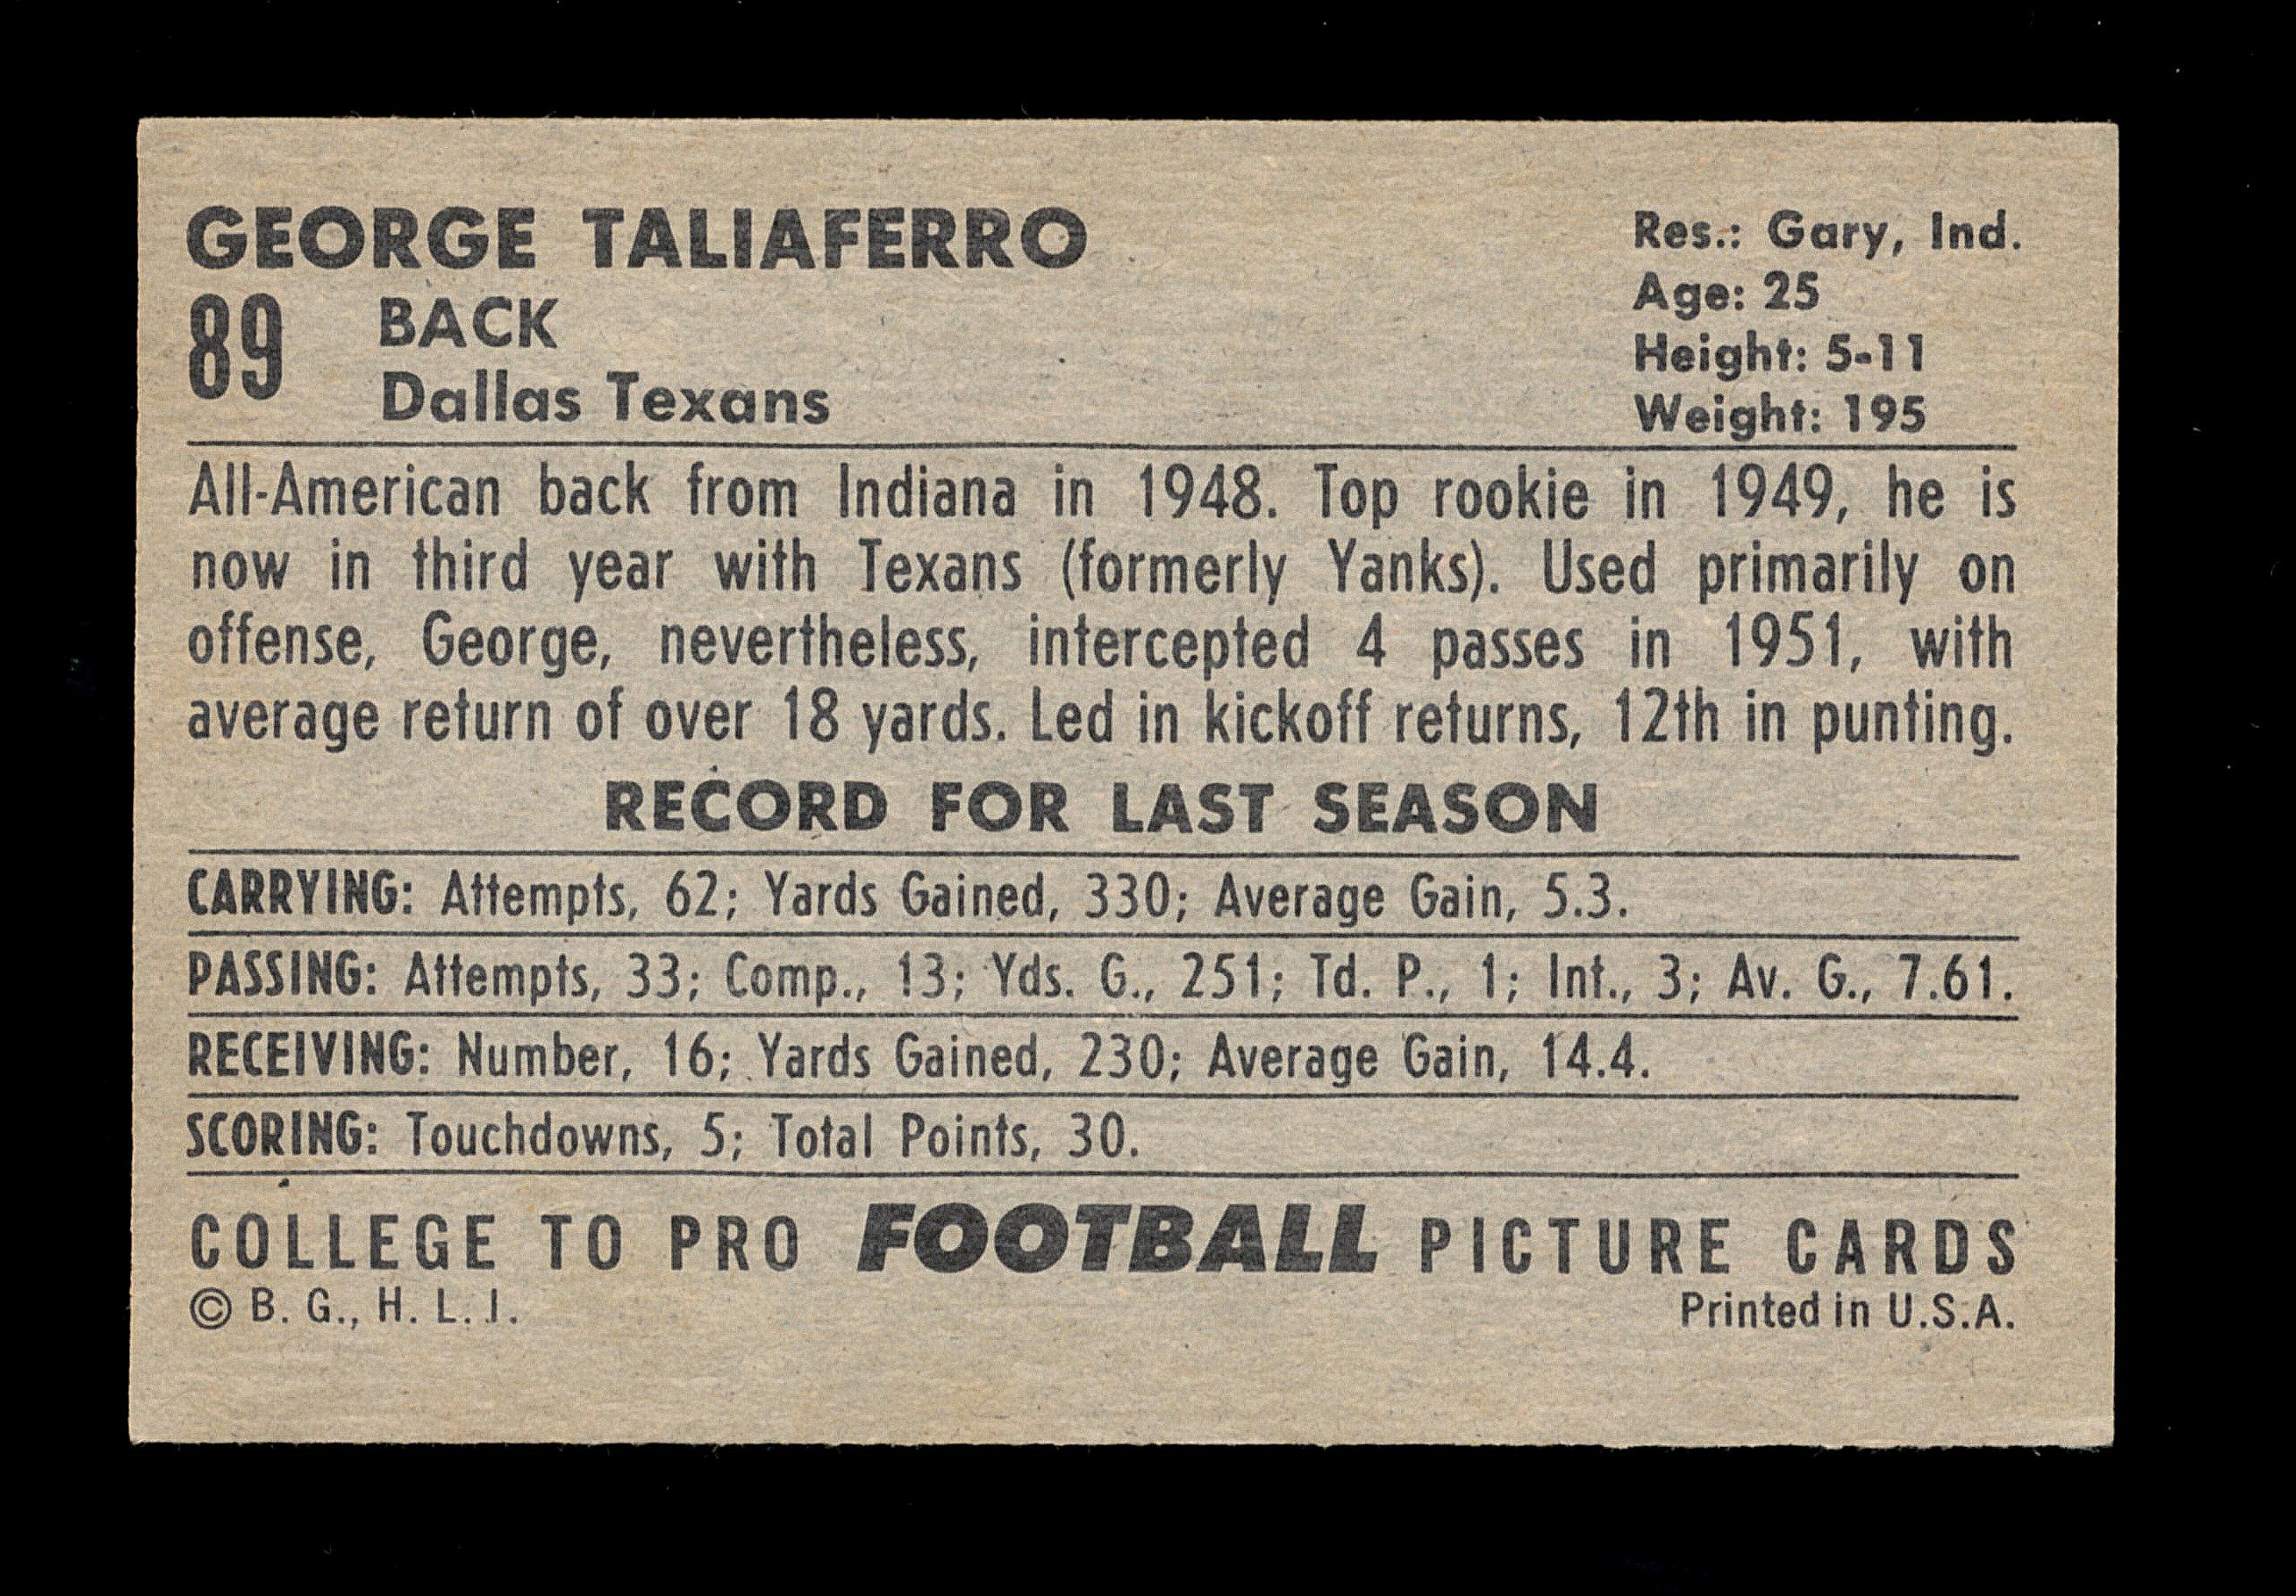 1952 Bowman Large Football Card #89 George Taliaferro Dallas Texans.